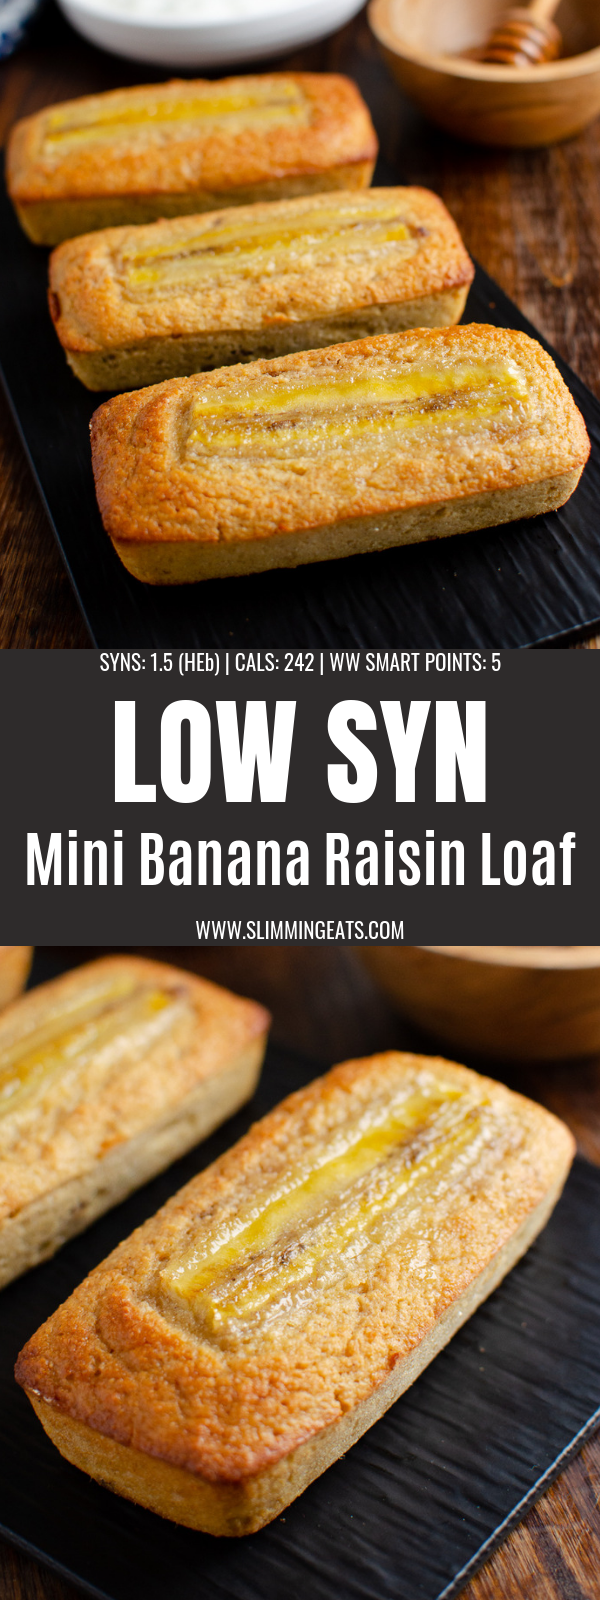 low syn mini banana raisin loaf pin image